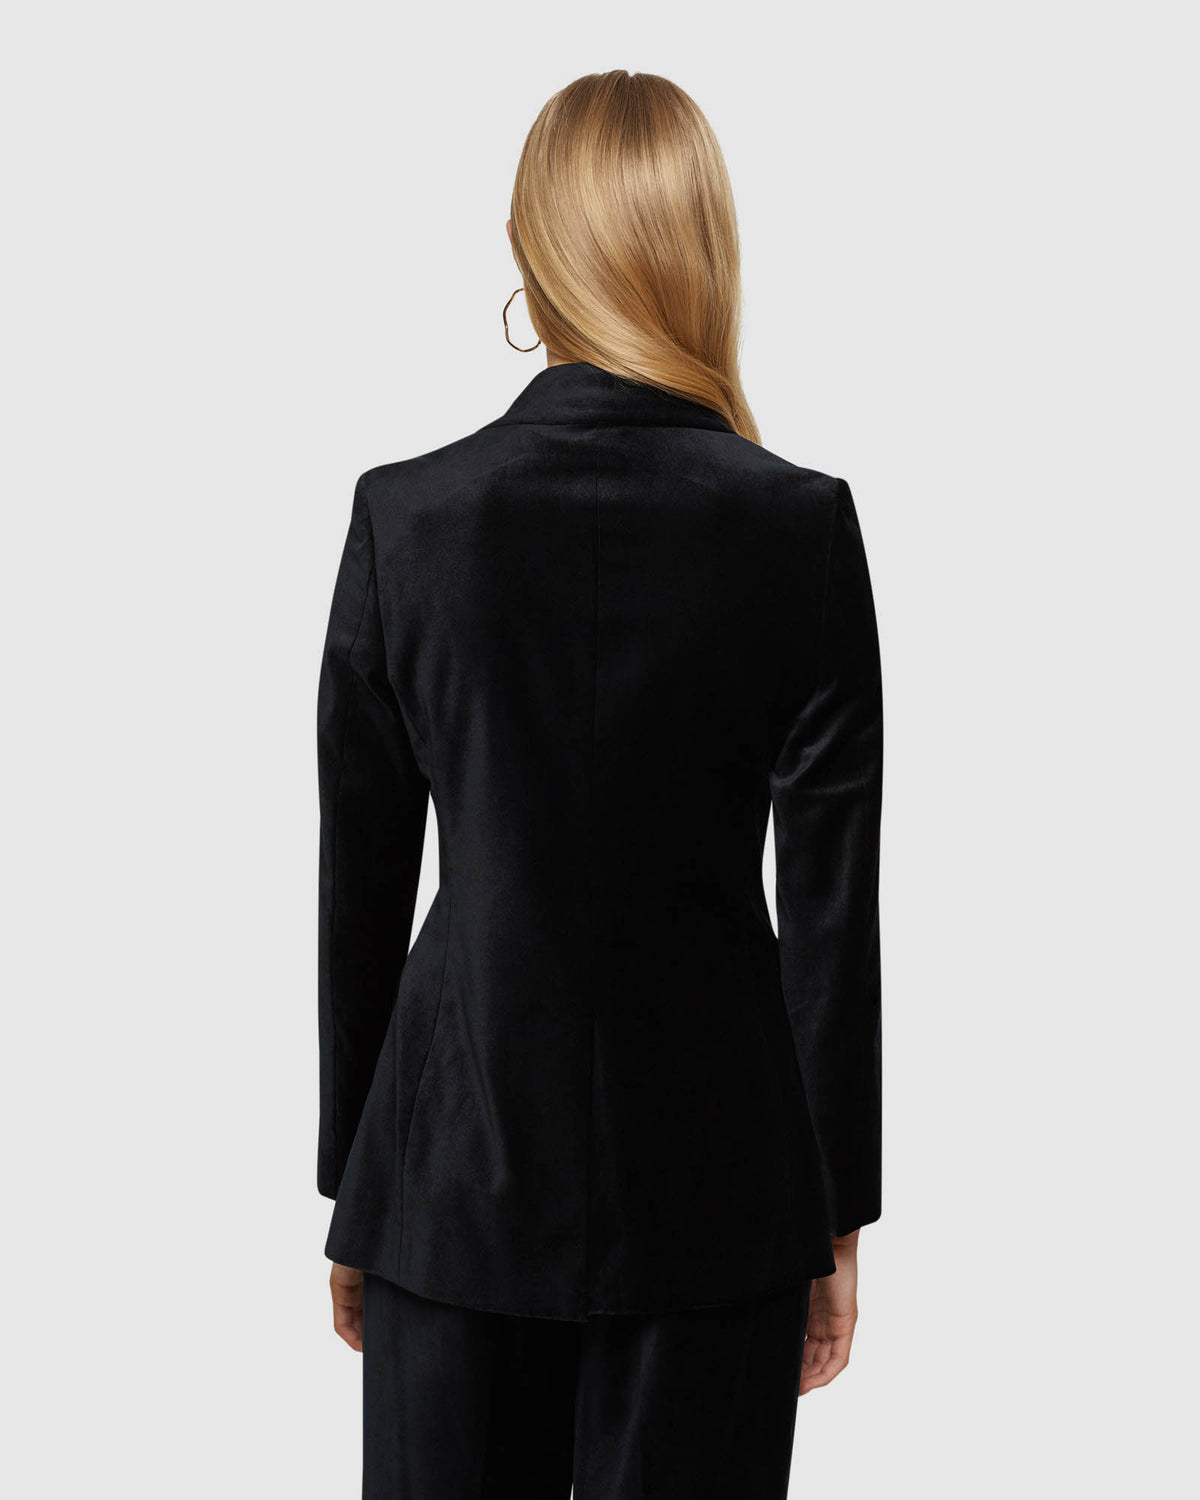 Lady Velvet Blazer Jacket Coat Pants Suit Formal Business OL Work Outfits  Plus